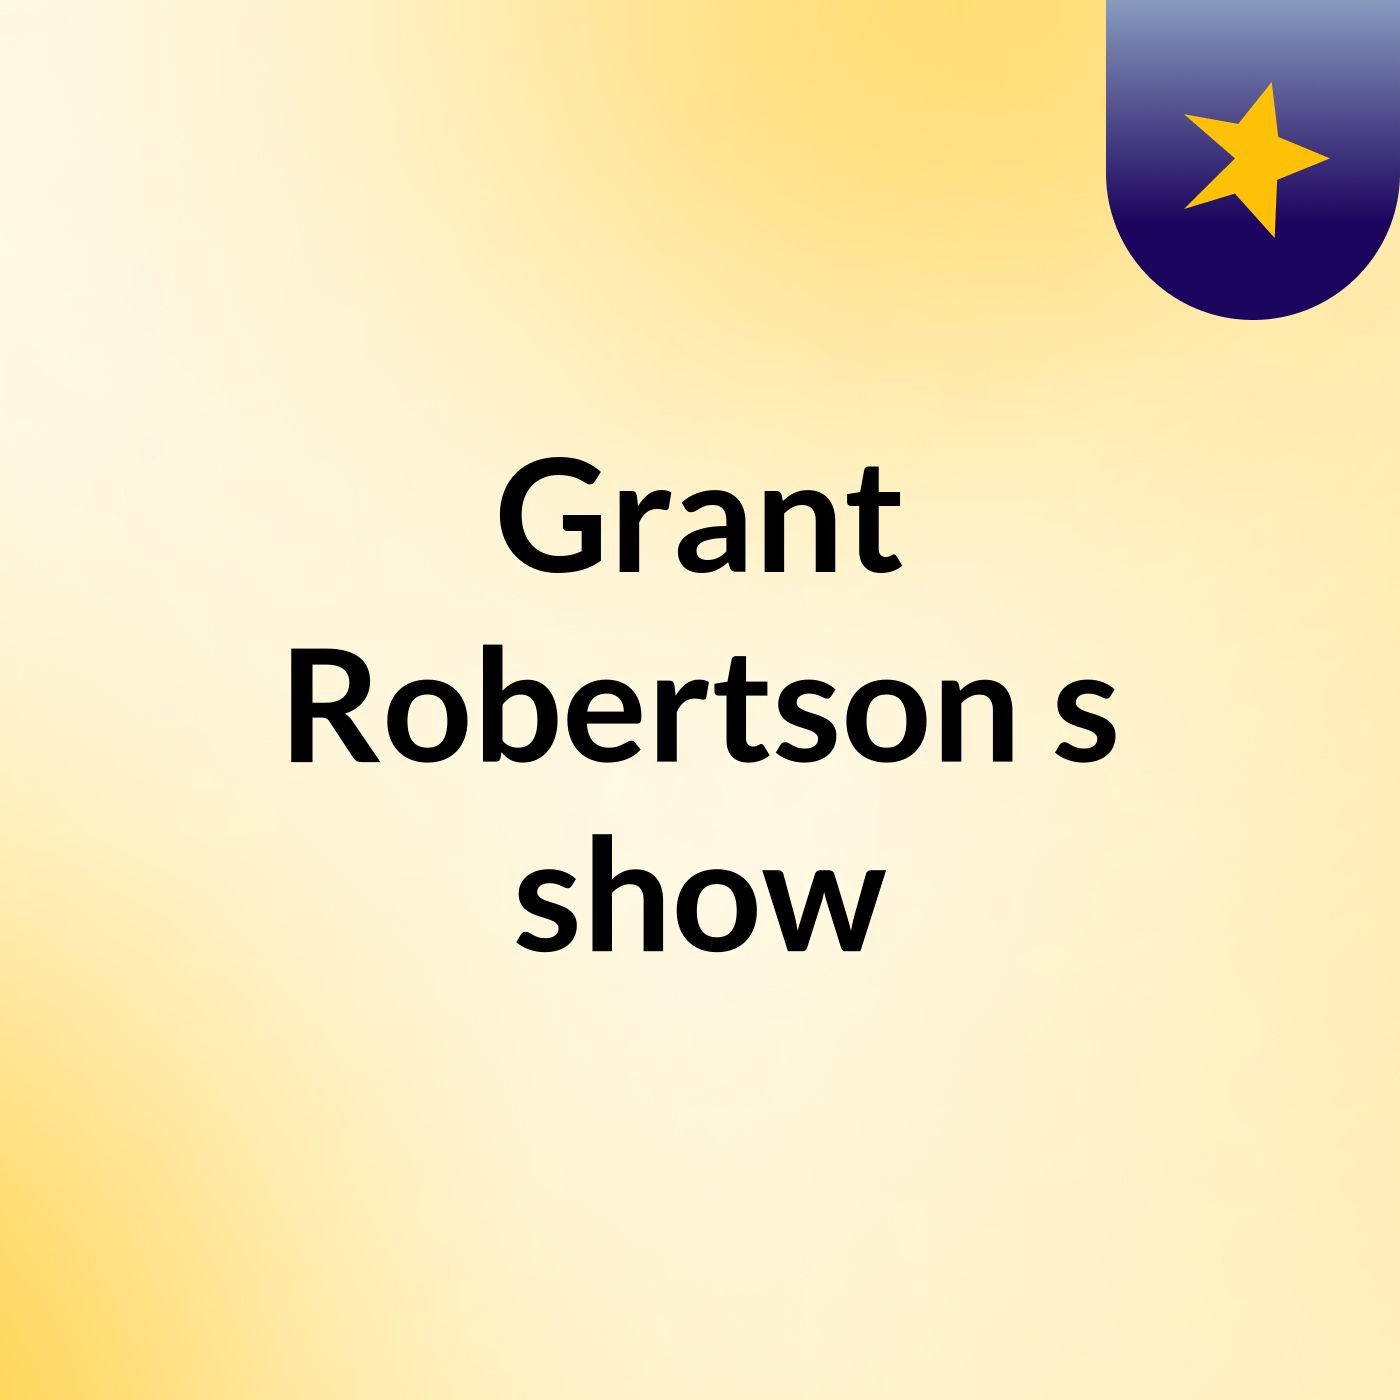 Grant Robertson's show